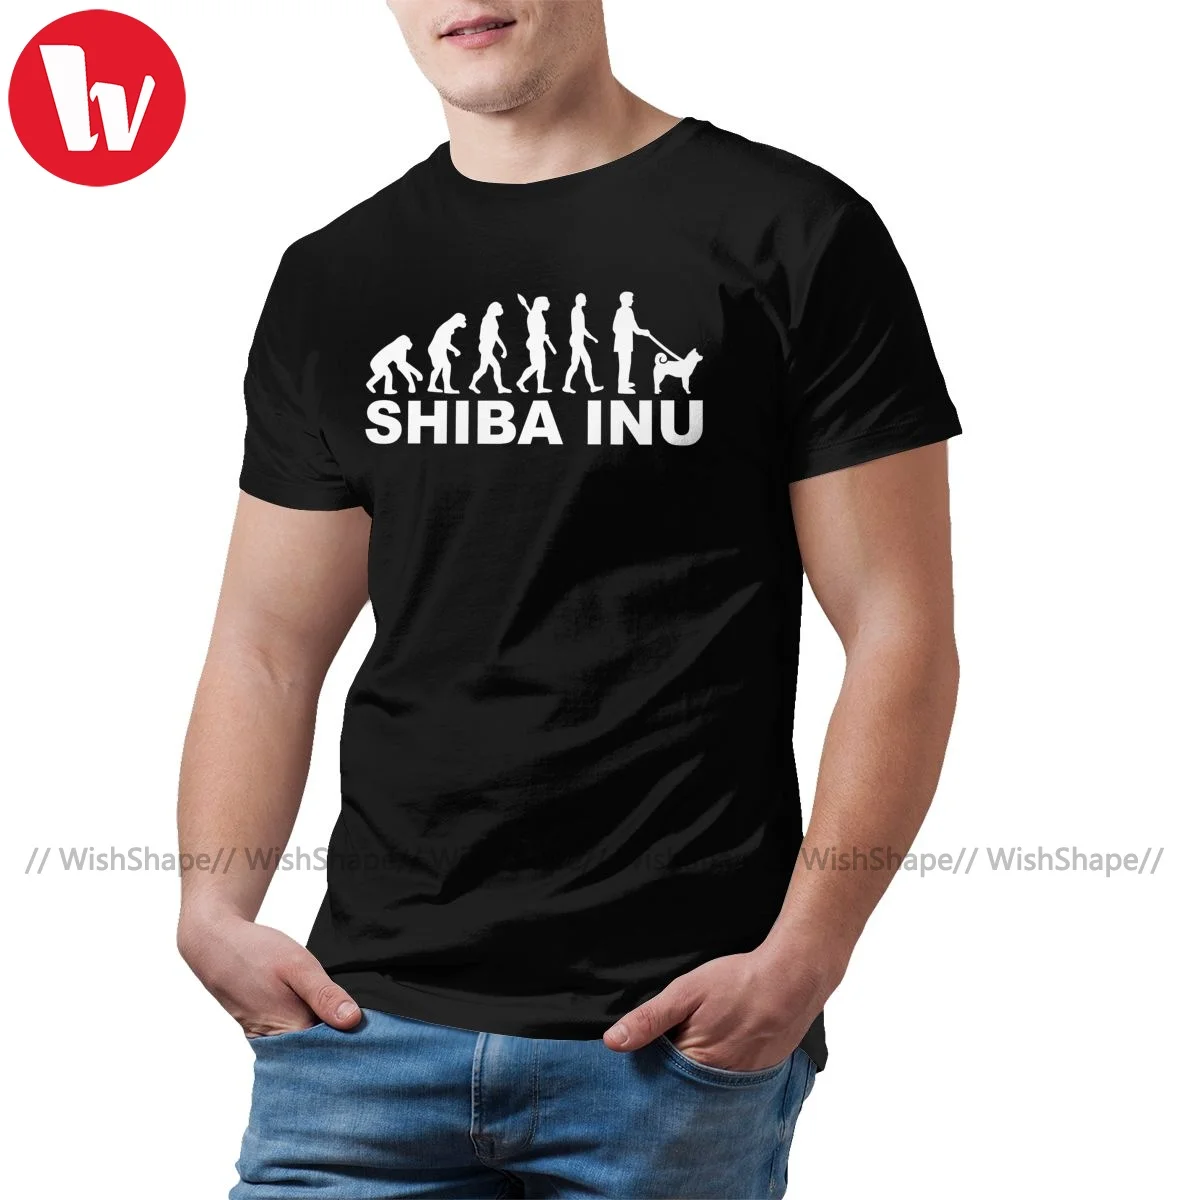 

Shiba Inu T-Shirt Basic Awesome Cotton T Shirt Printed Short Sleeve Tee Shirt Men 4xl